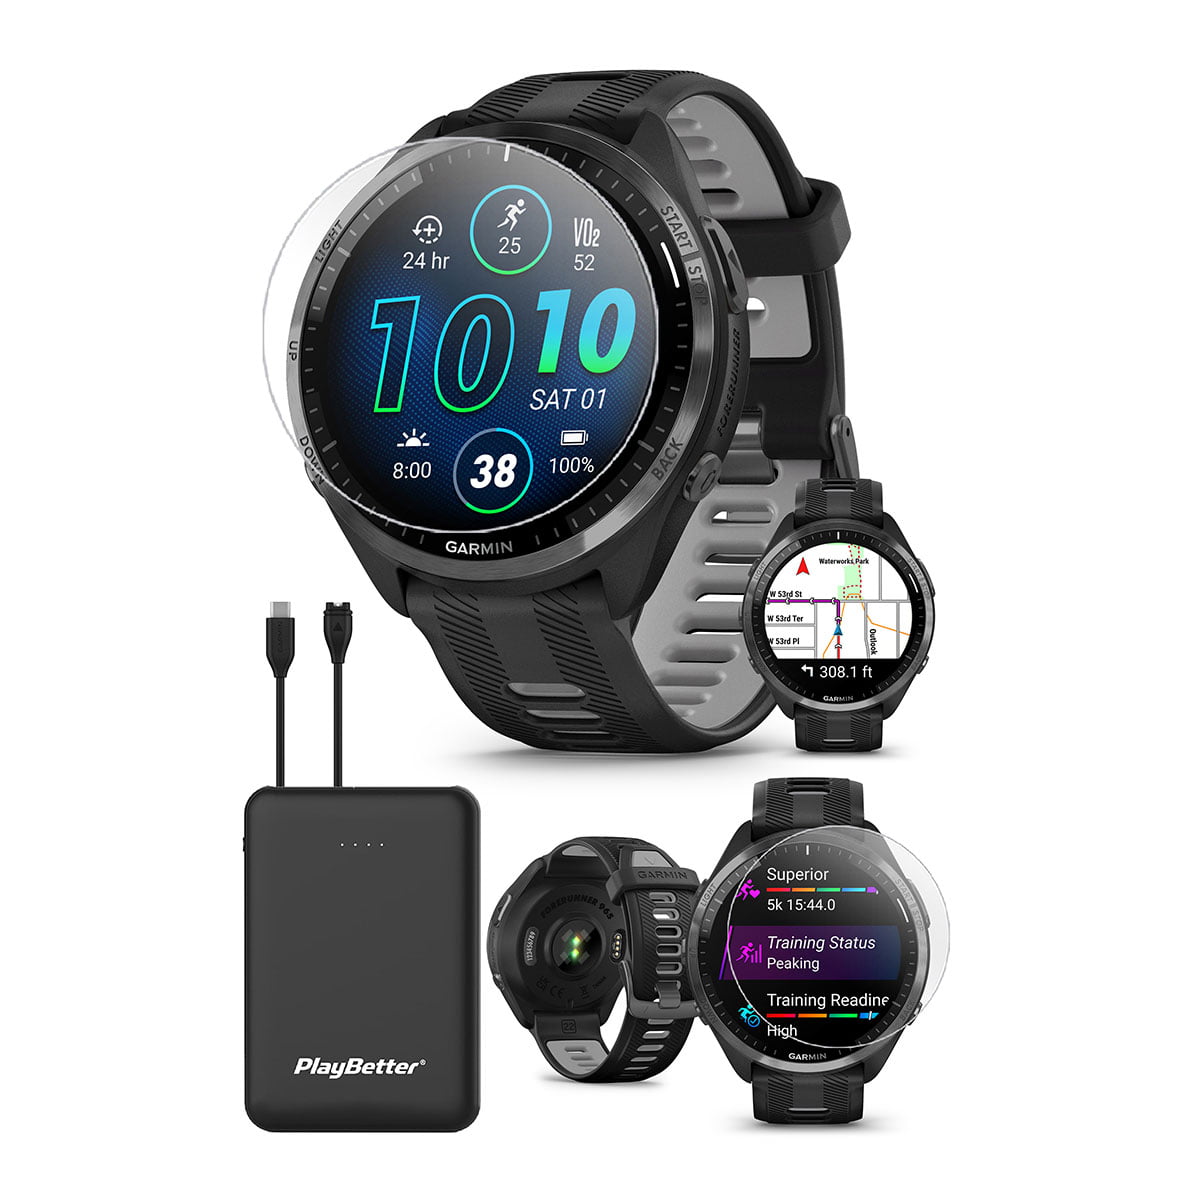 Garmin Forerunner 965 (Black/Powder Gray) Premium Running & Triathlon Smartwatch Bundle with PlayBetter HD Screen Protectors & Portable Charger - Walmart.com